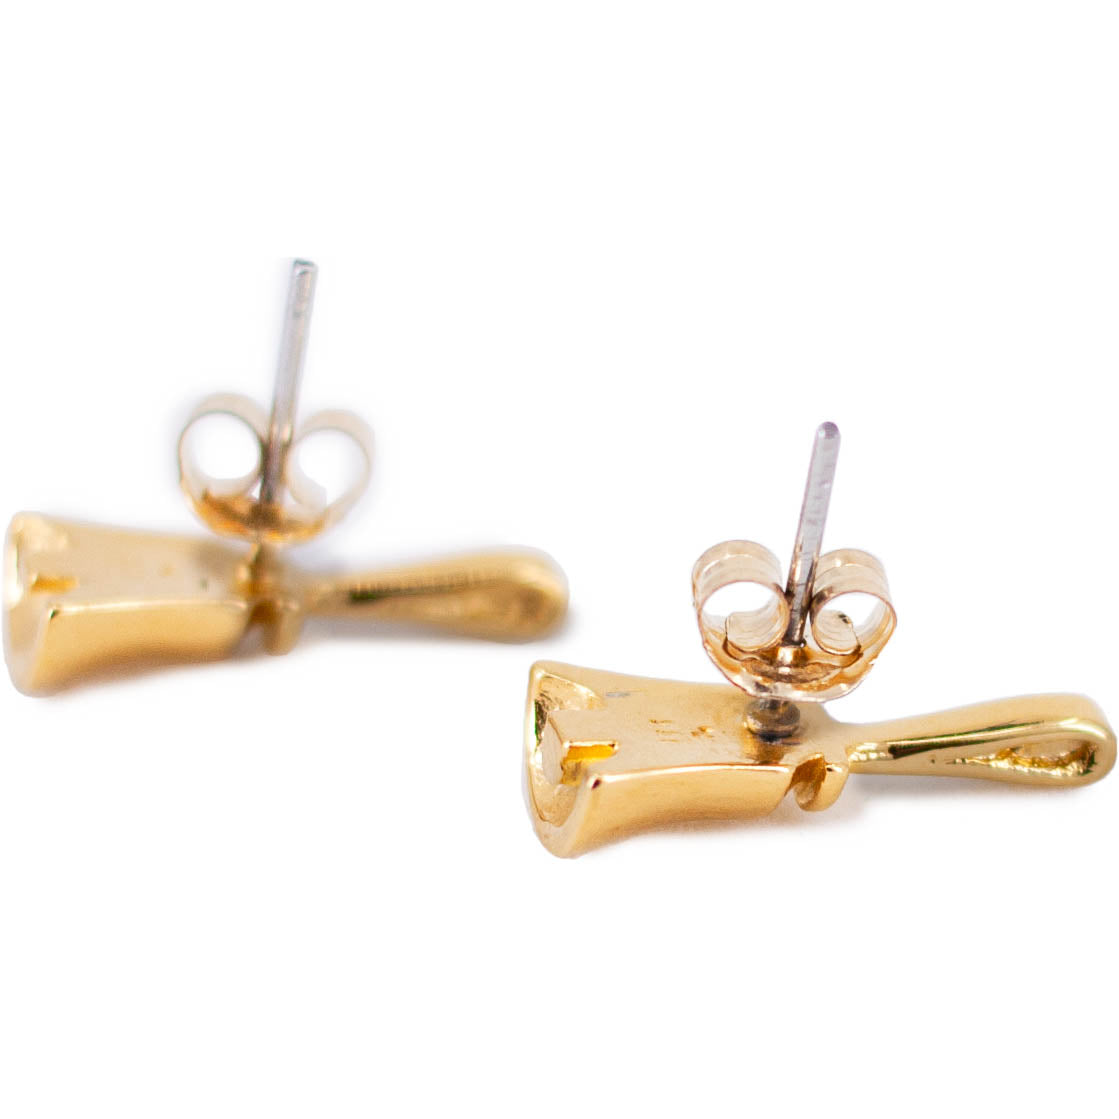 Handbell Earrings, post, gold vermeil